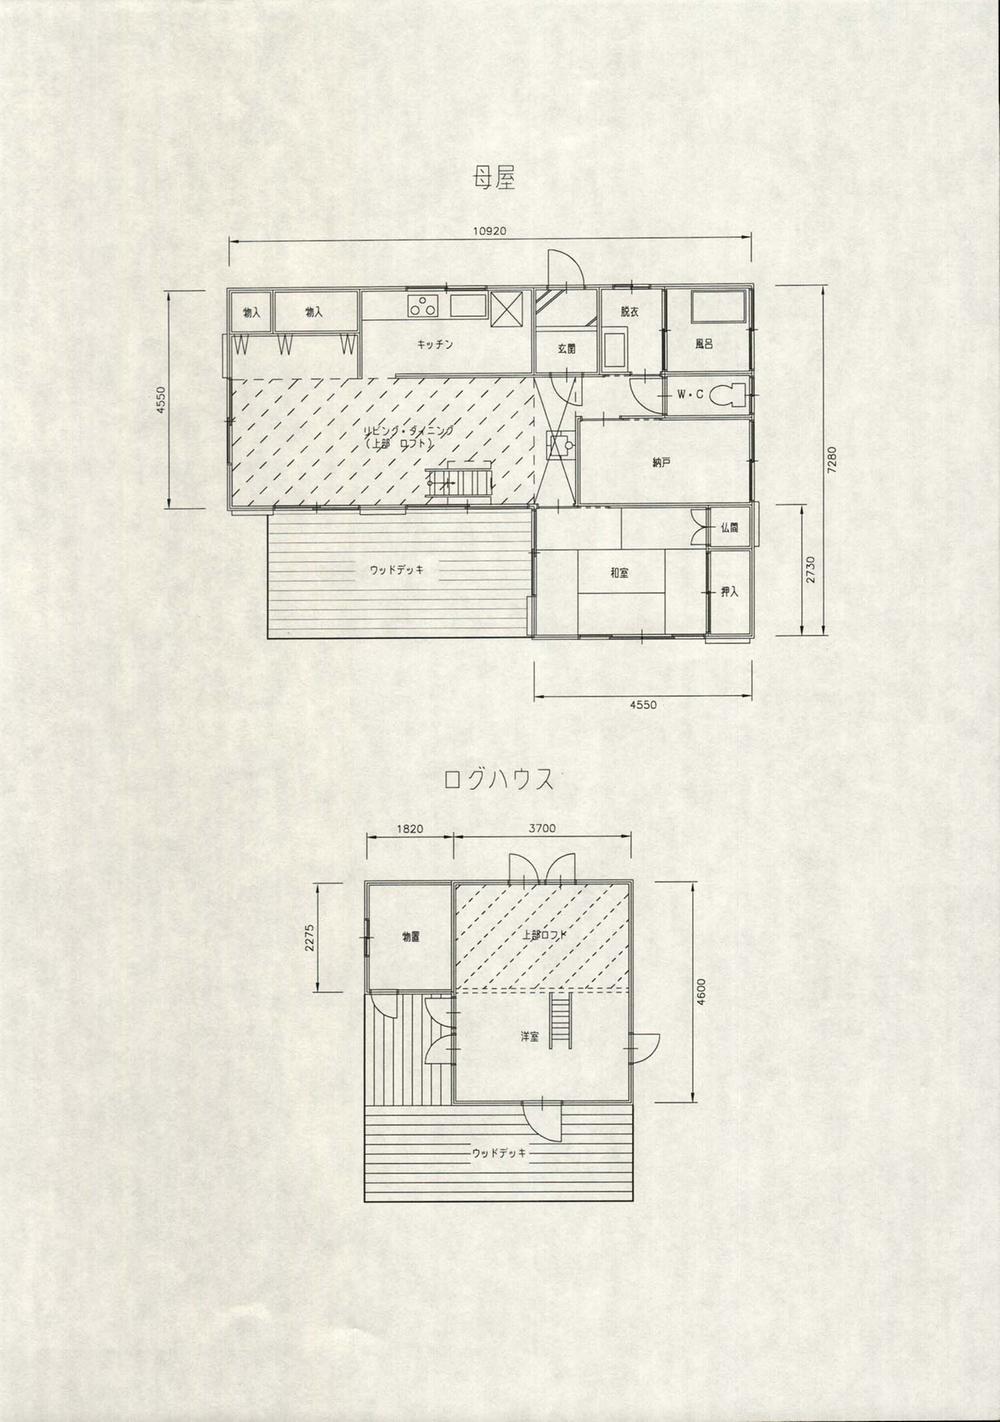 Floor plan. 12 million yen, 1LDK + S (storeroom), Land area 1,265 sq m , Building area 62.1 sq m